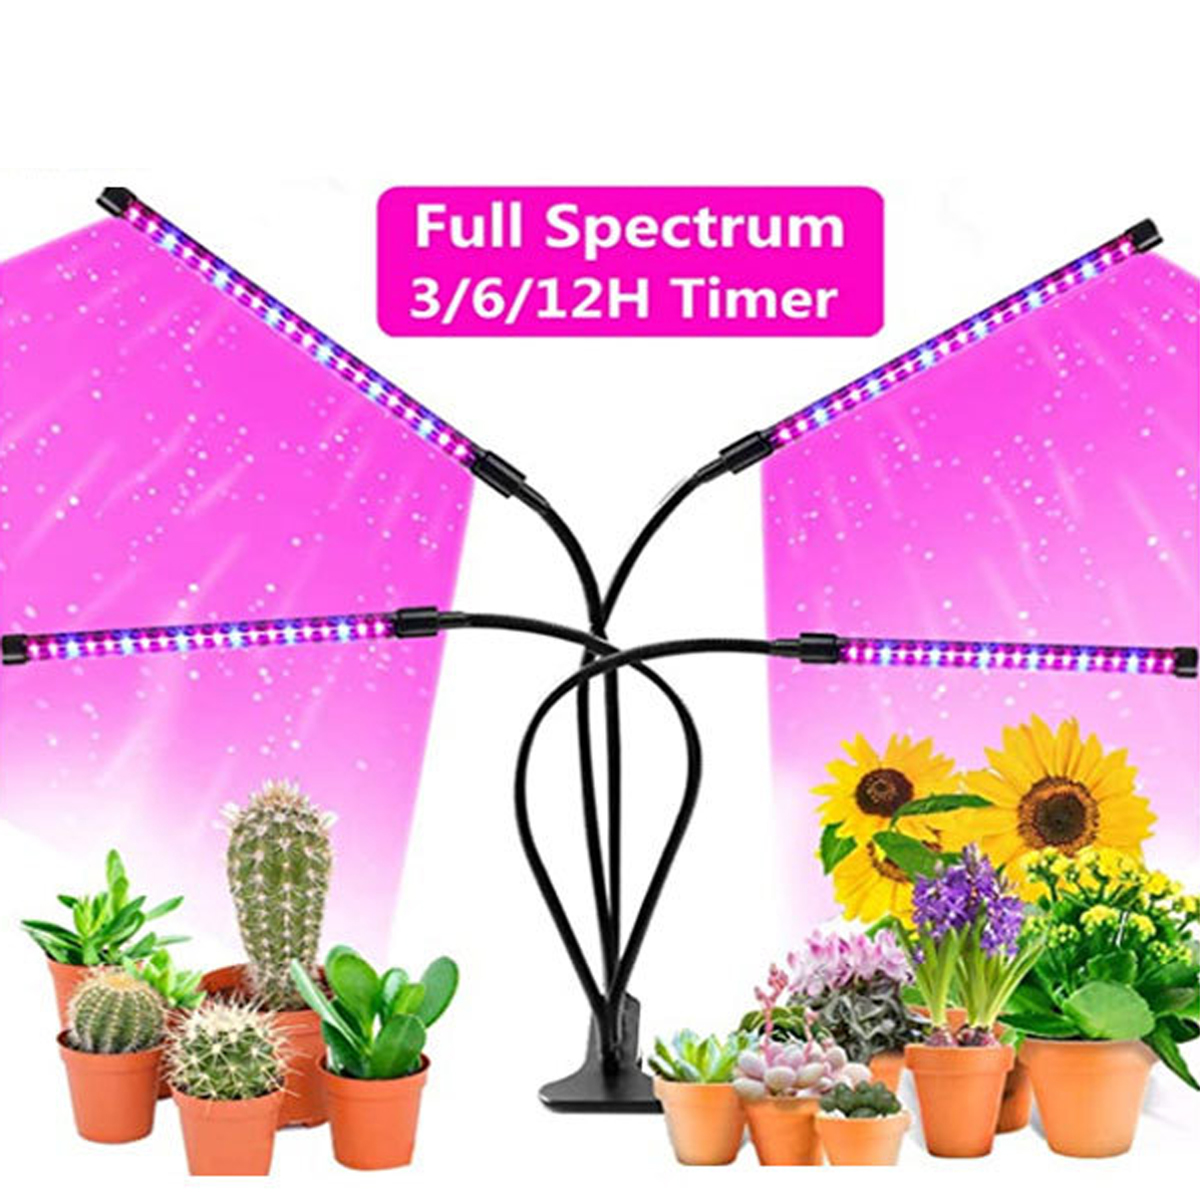 4-Head-40W-Full-Spectrum-LED-Grow-Light-Flexible-Pot-Plant-Flower-Vegetable-Growing-Lamp-with-Timer--1710489-2